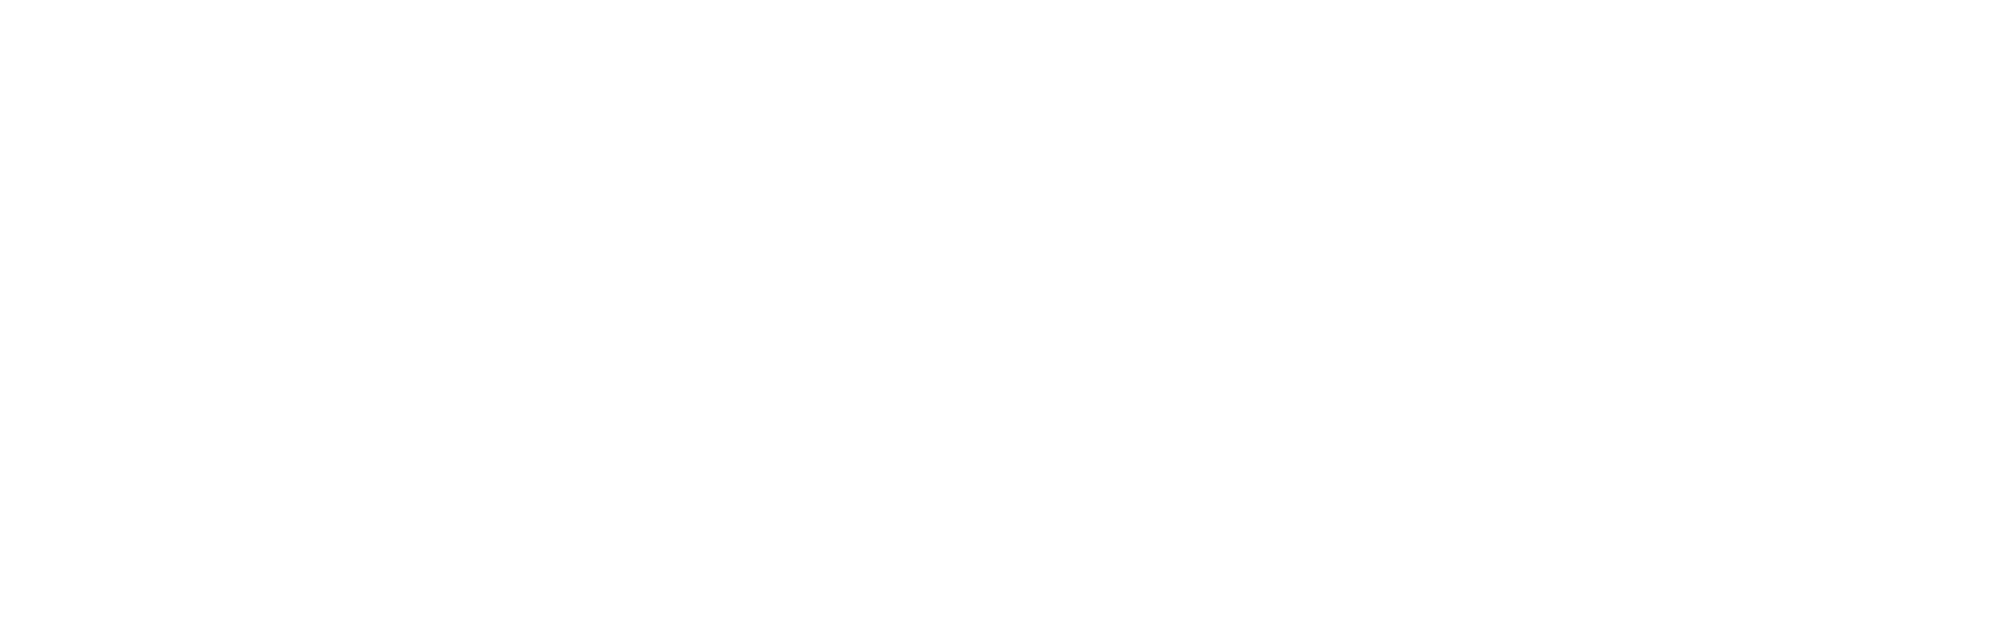 Aspen Room